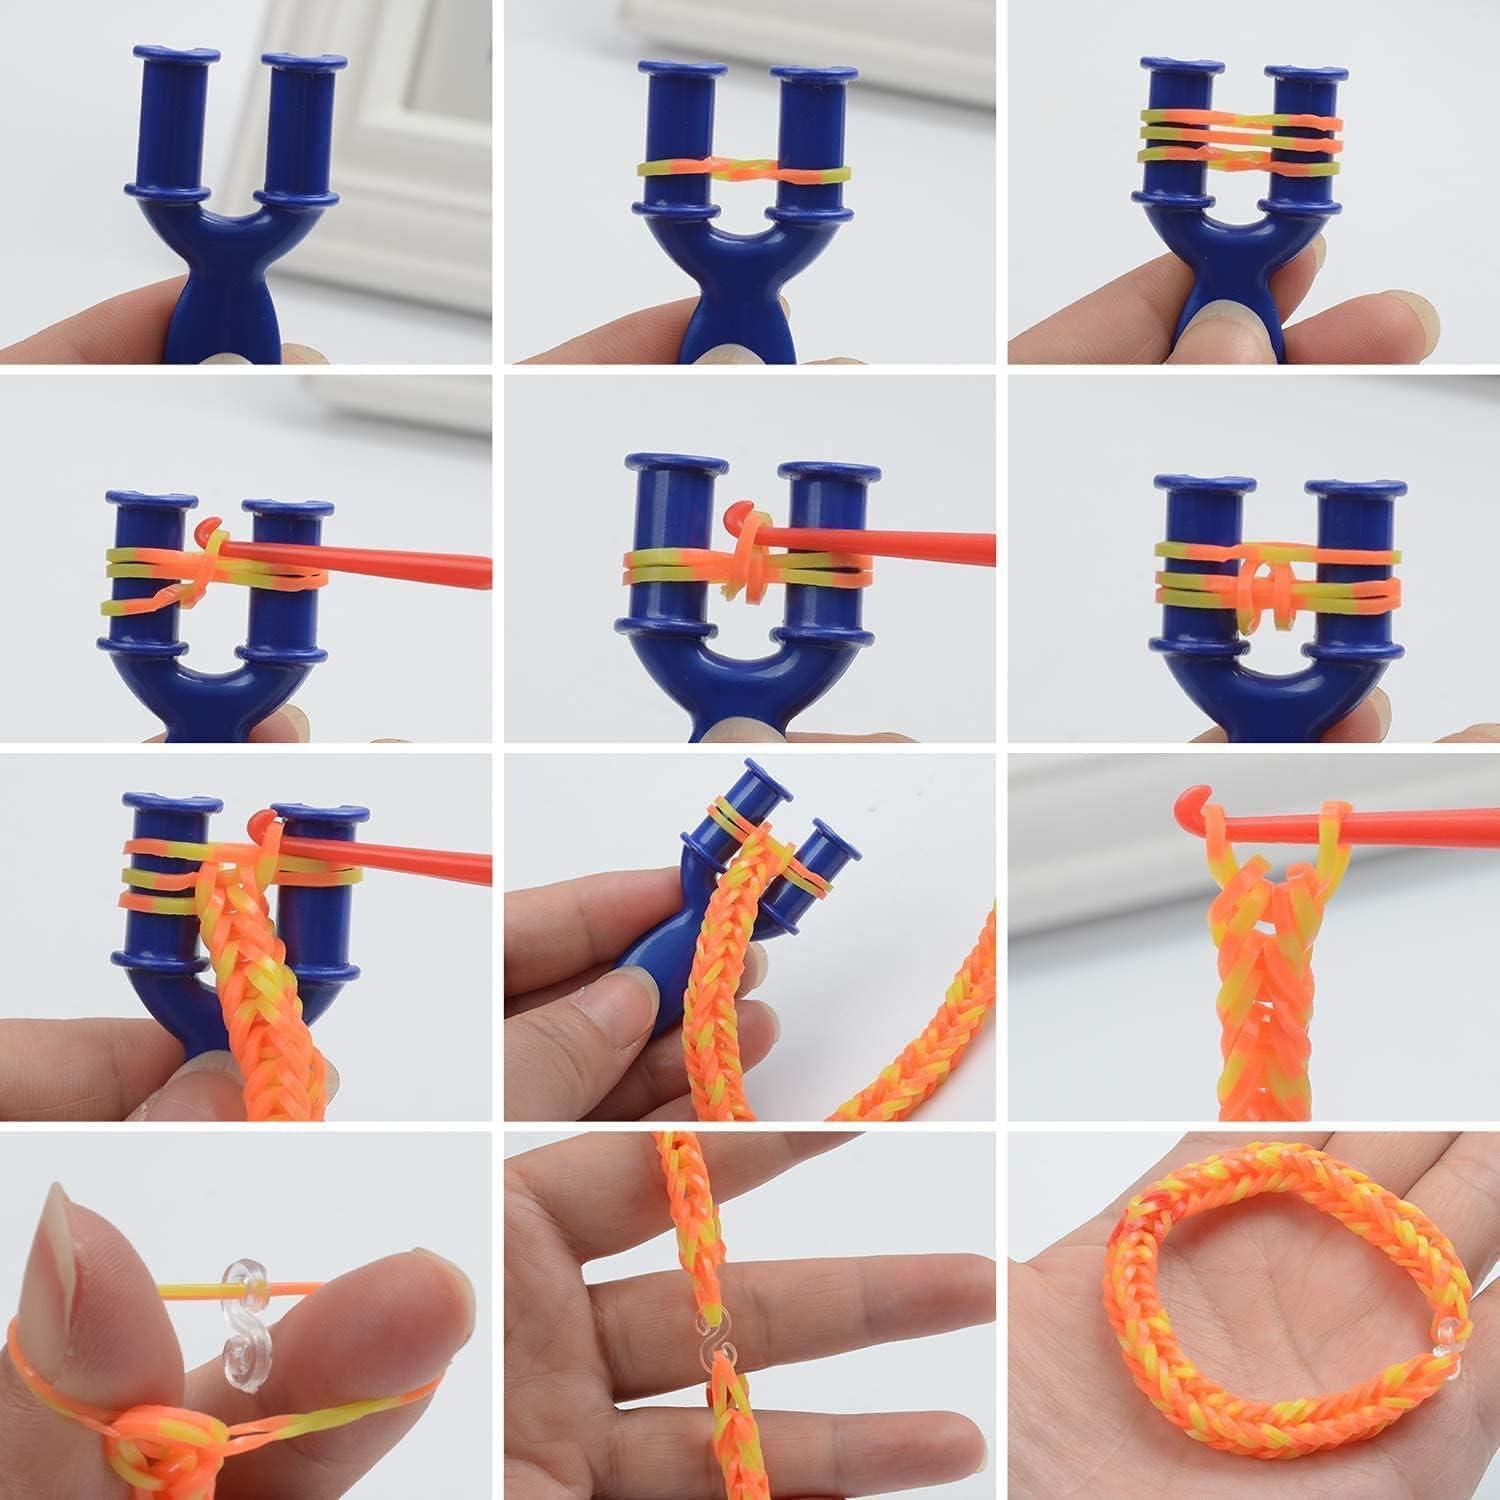 Rainbow Refill Rubber Bands Bracelet Jewellery Making Kit Mini